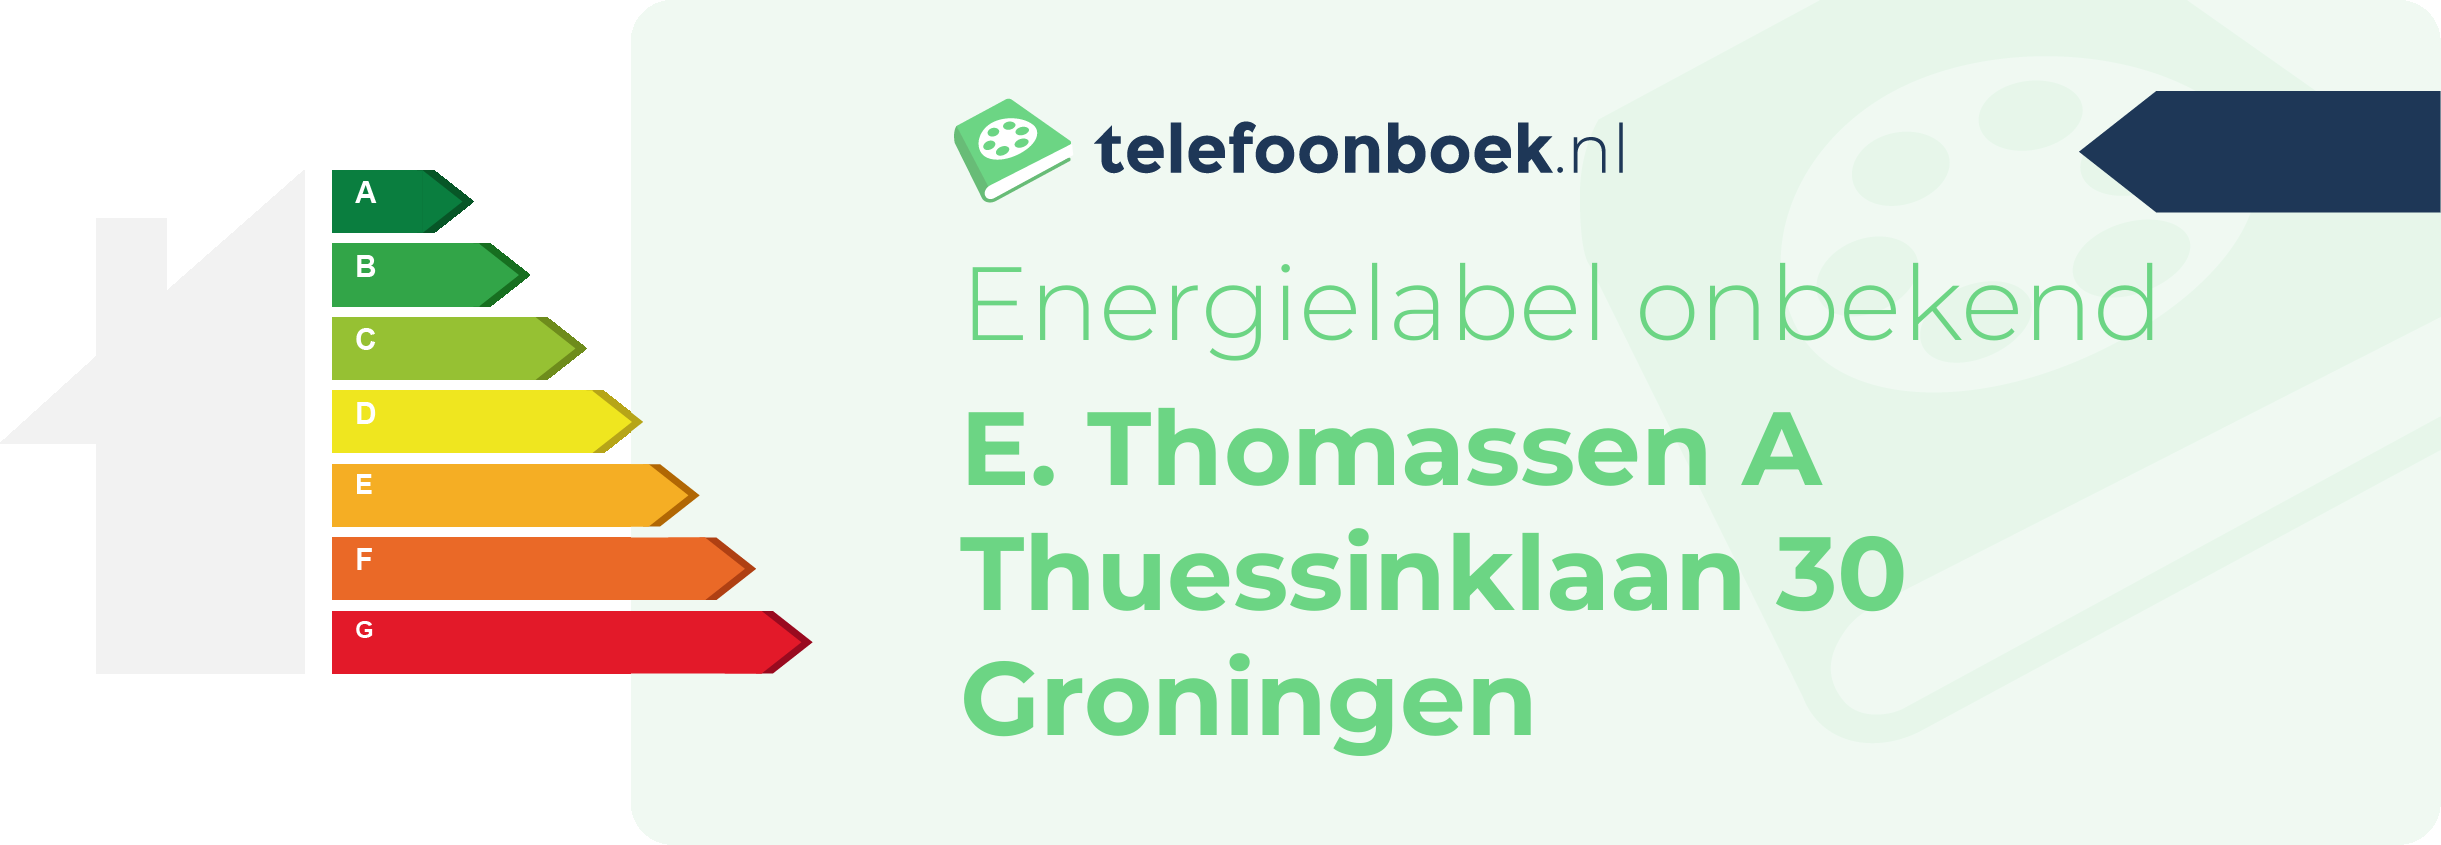 Energielabel E. Thomassen A Thuessinklaan 30 Groningen